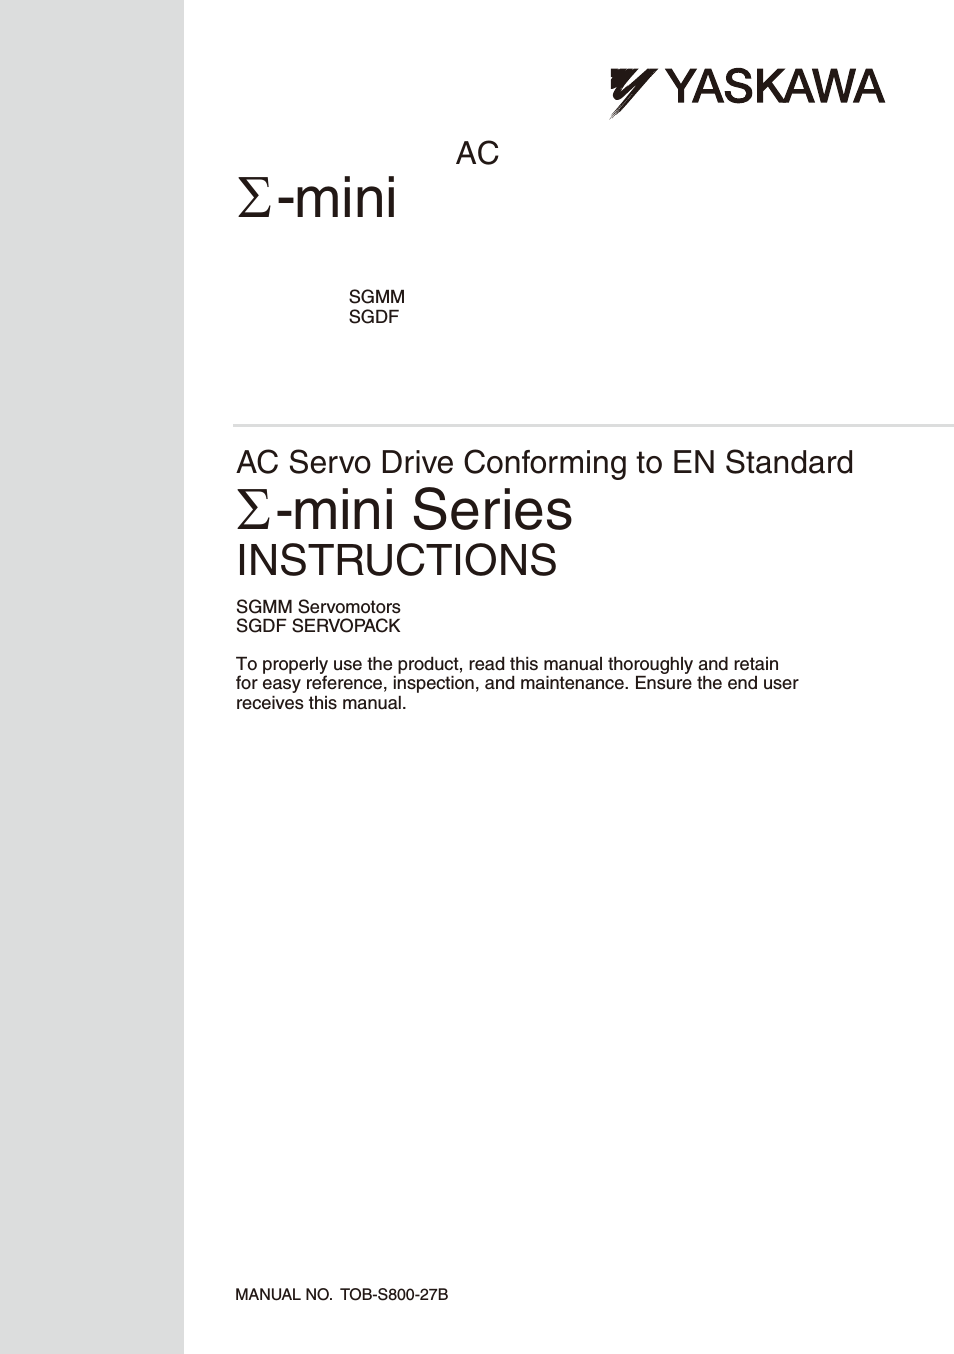 AC Servo Drive Conforming to EN Standard Sigma Mini